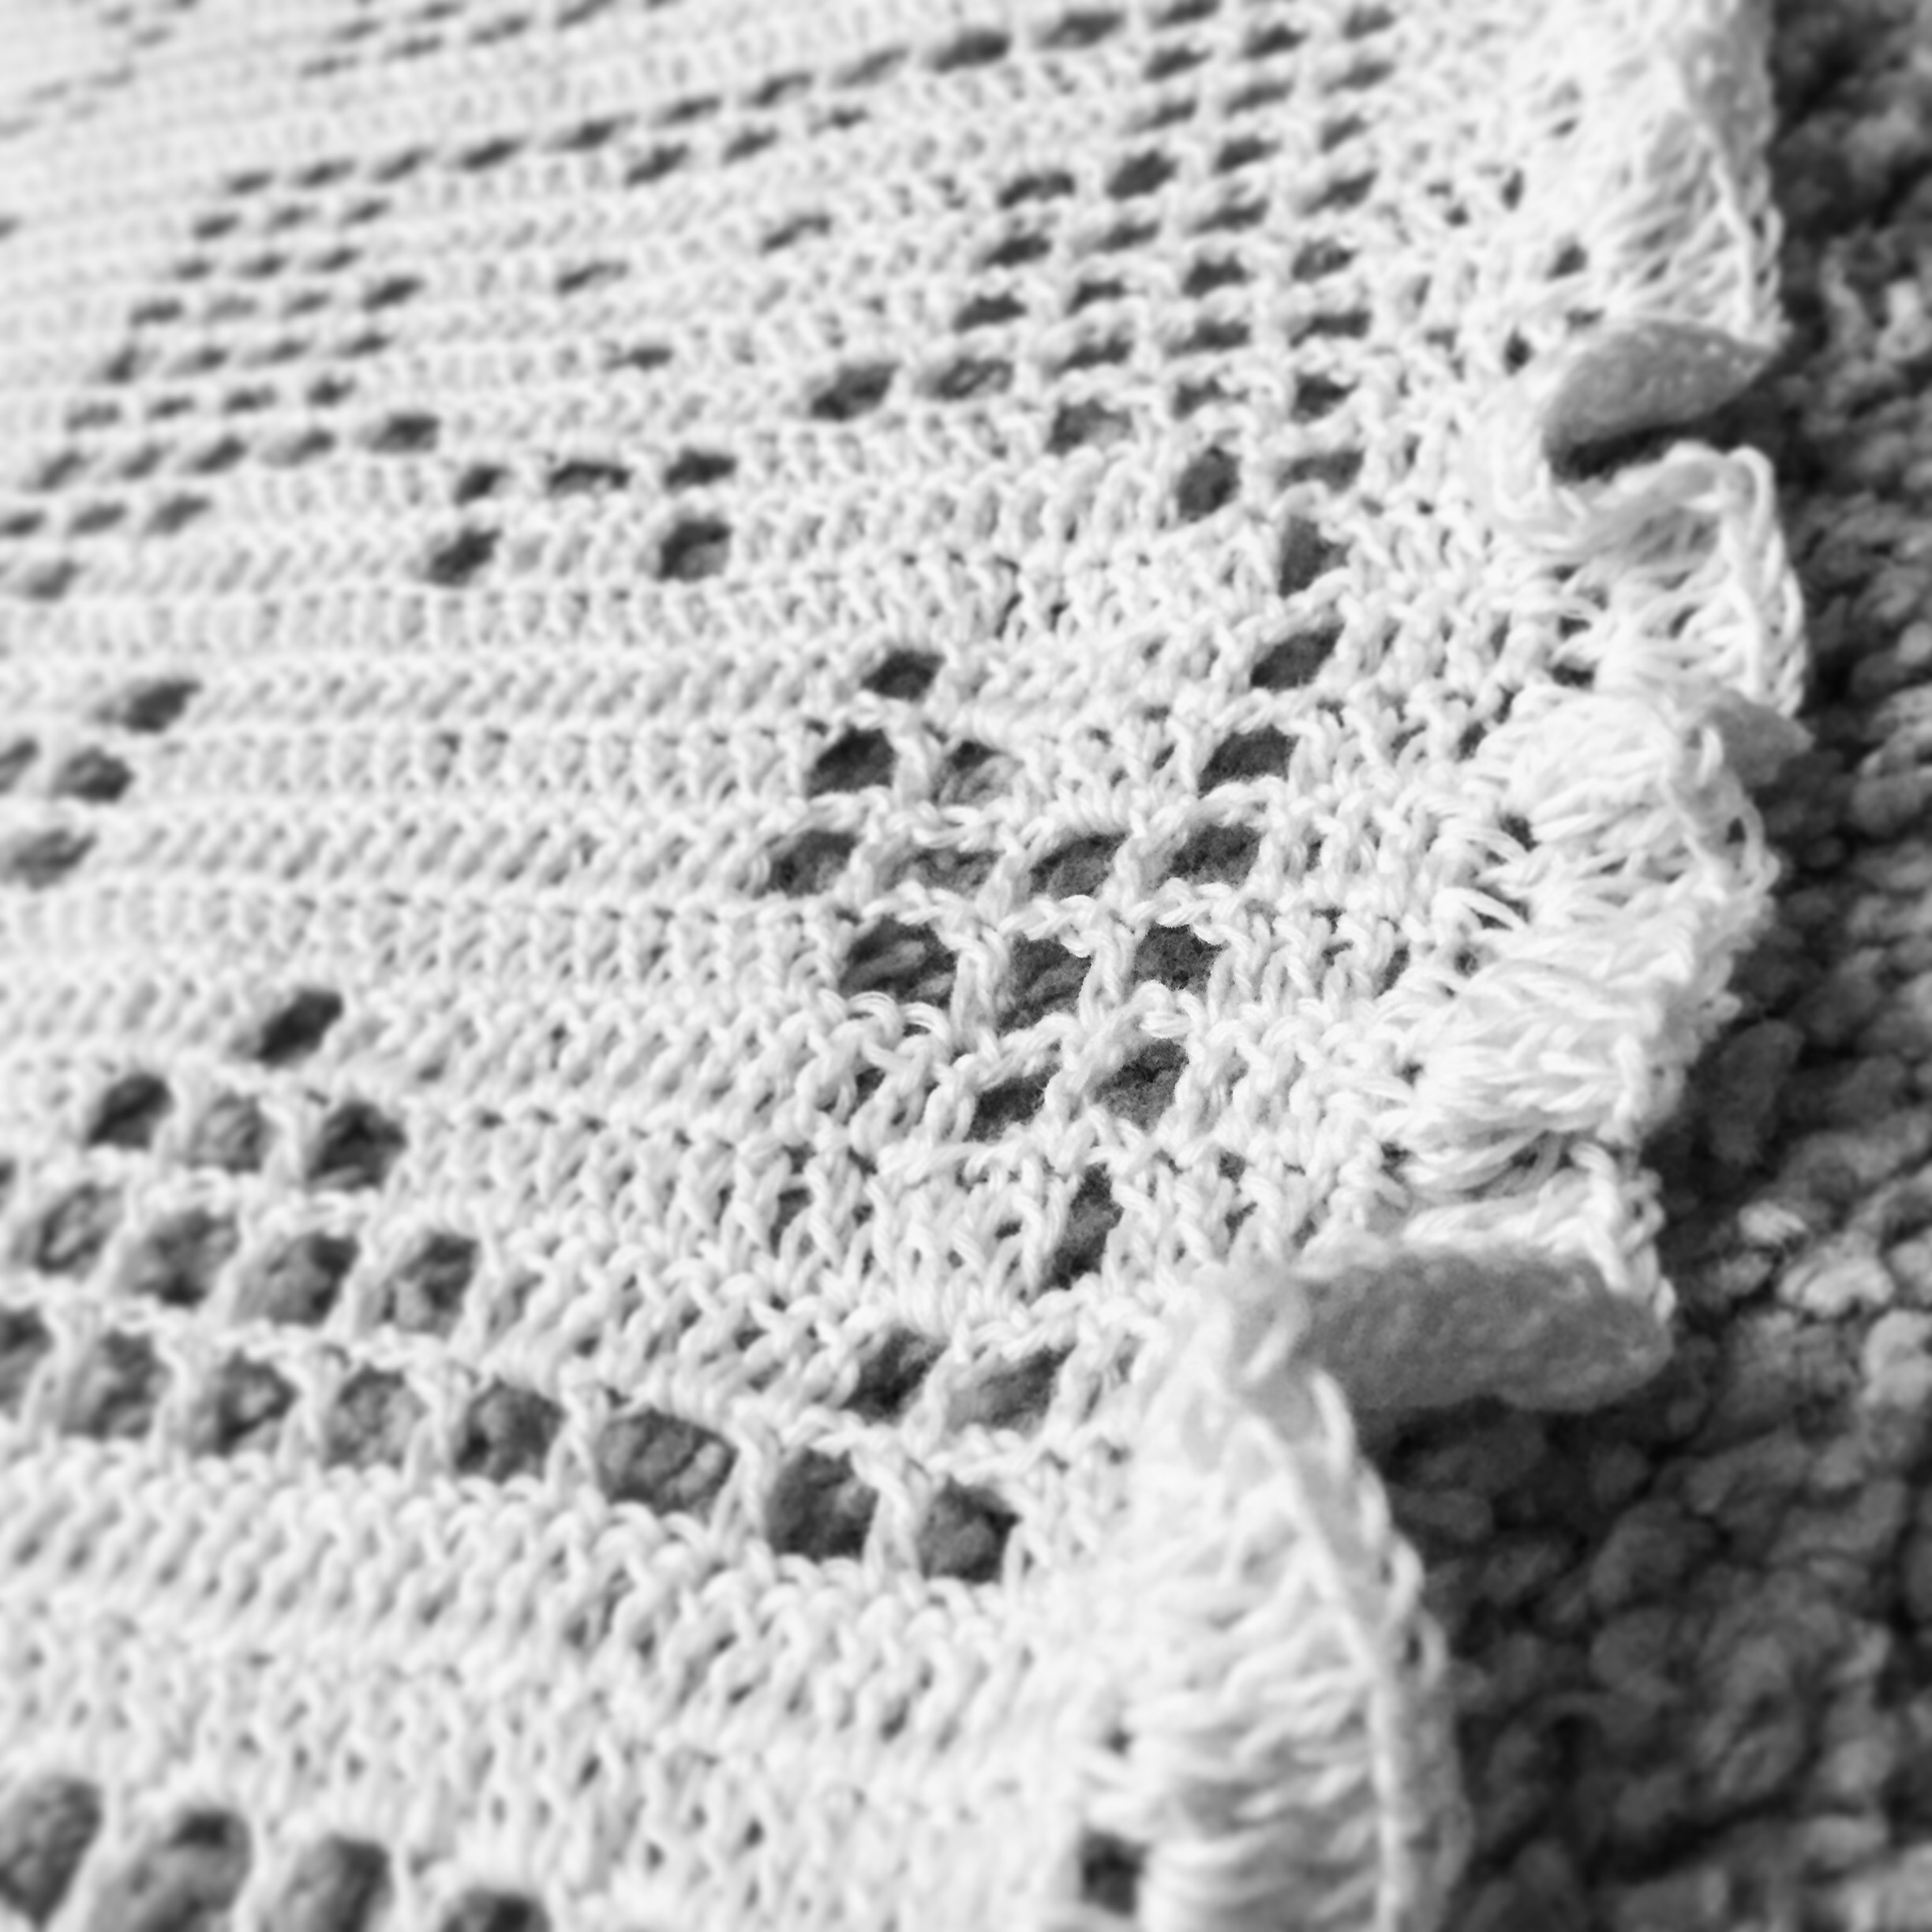 Crochet Blanket Number 2!